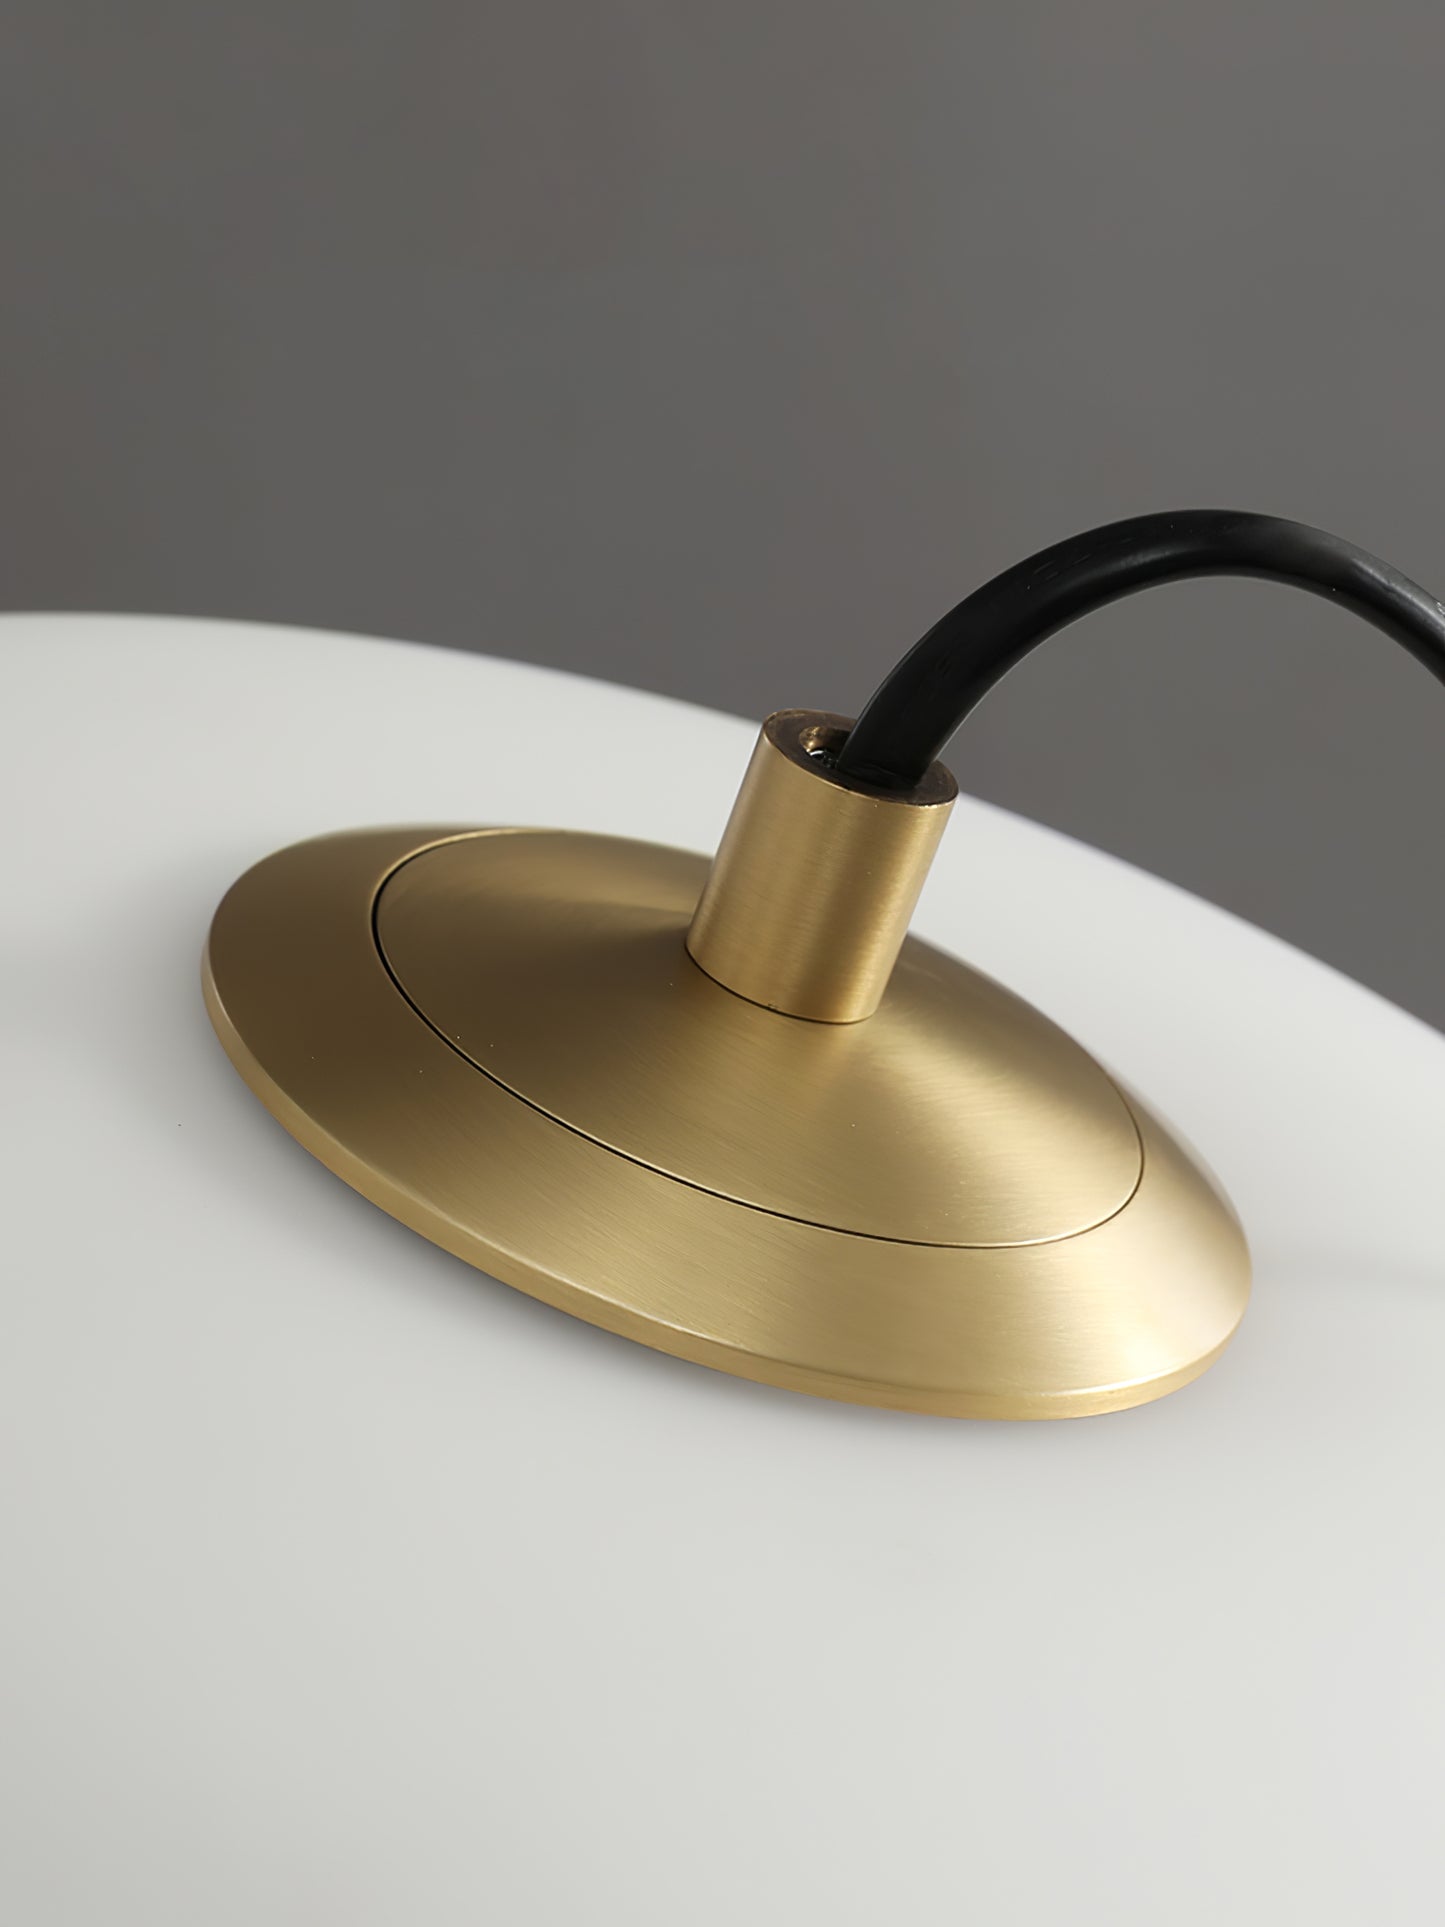 Pump Table Lamp